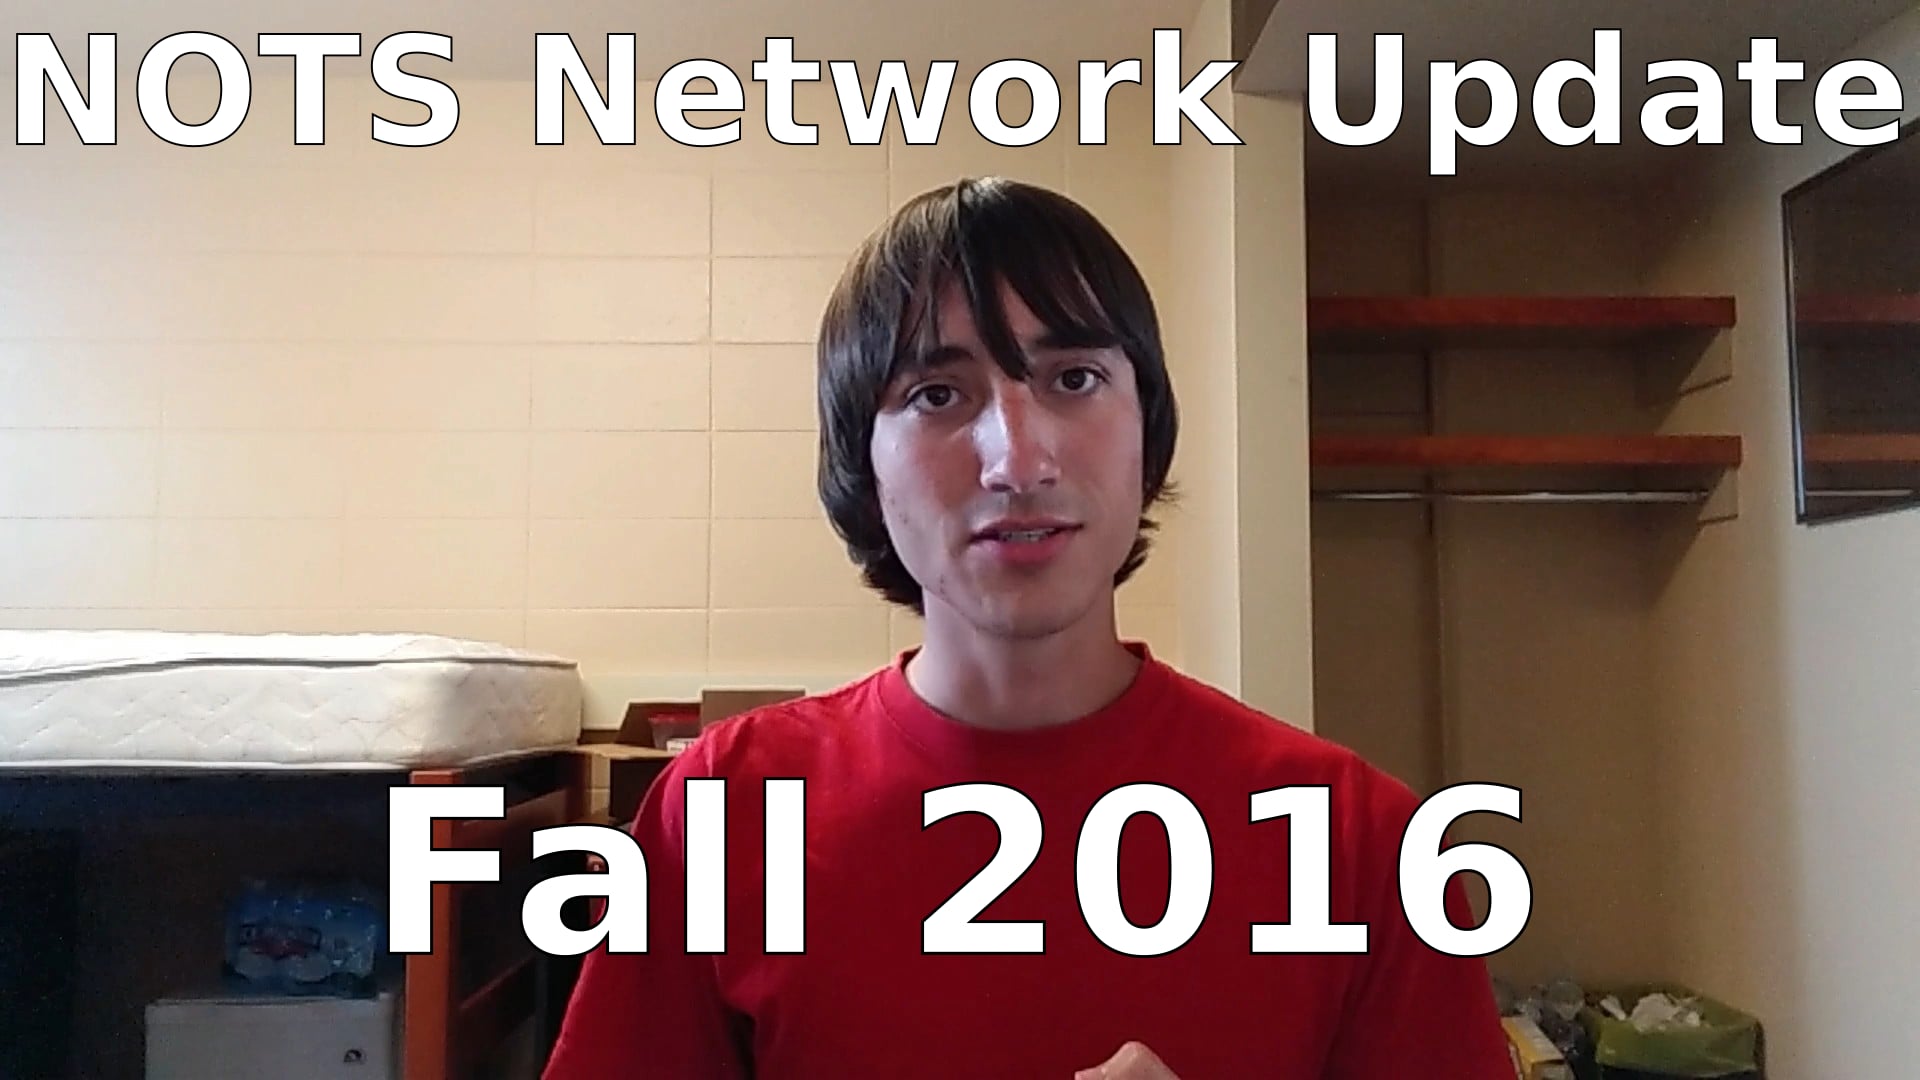 Network Update - Fall 2016